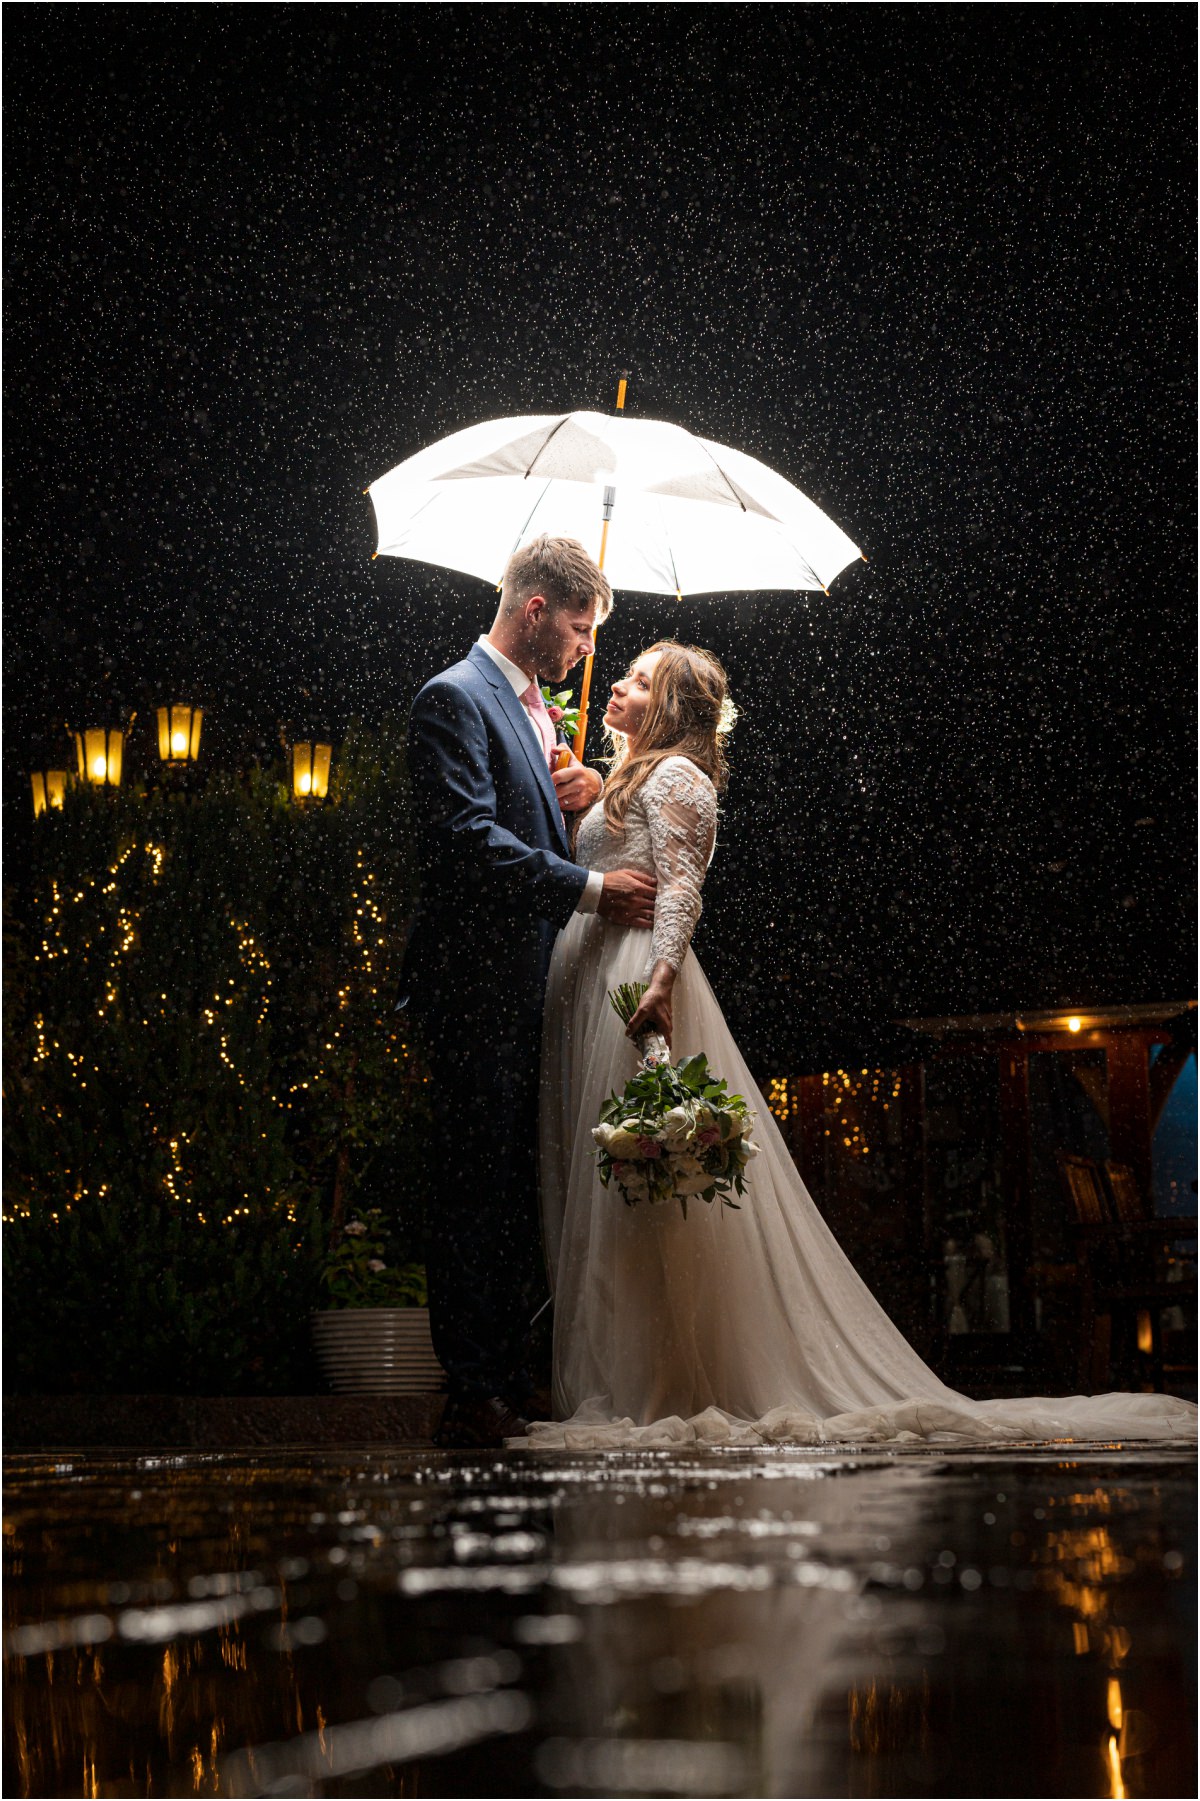 Swancar Farm Wedding Photography in the rain